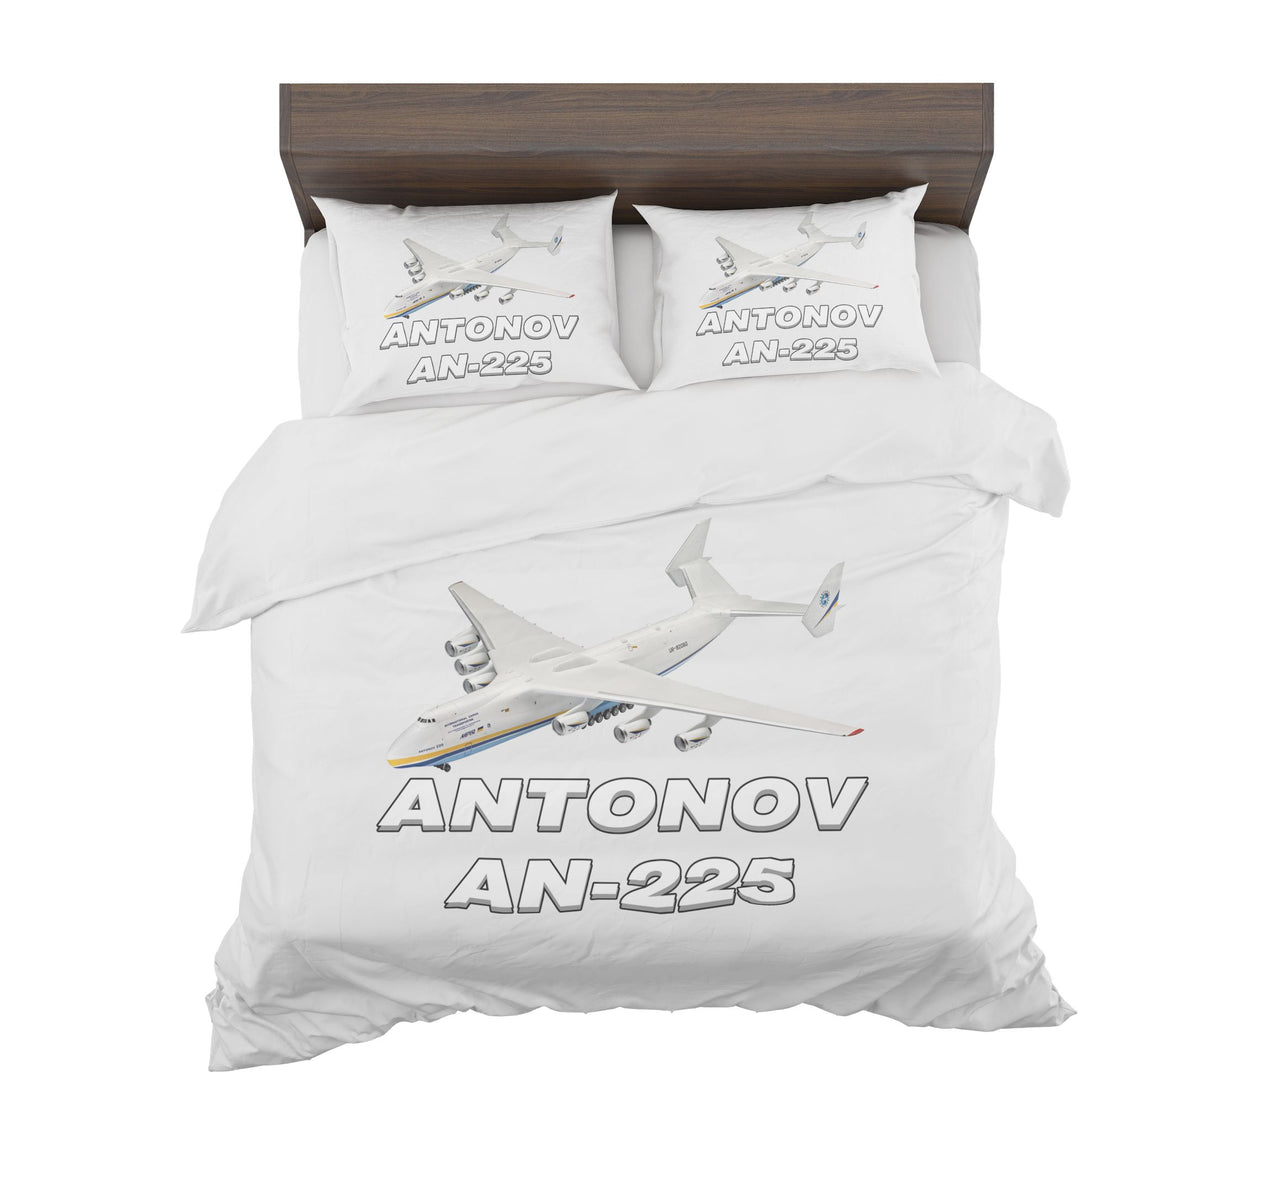 Antonov AN-225 (12) Designed Bedding Sets